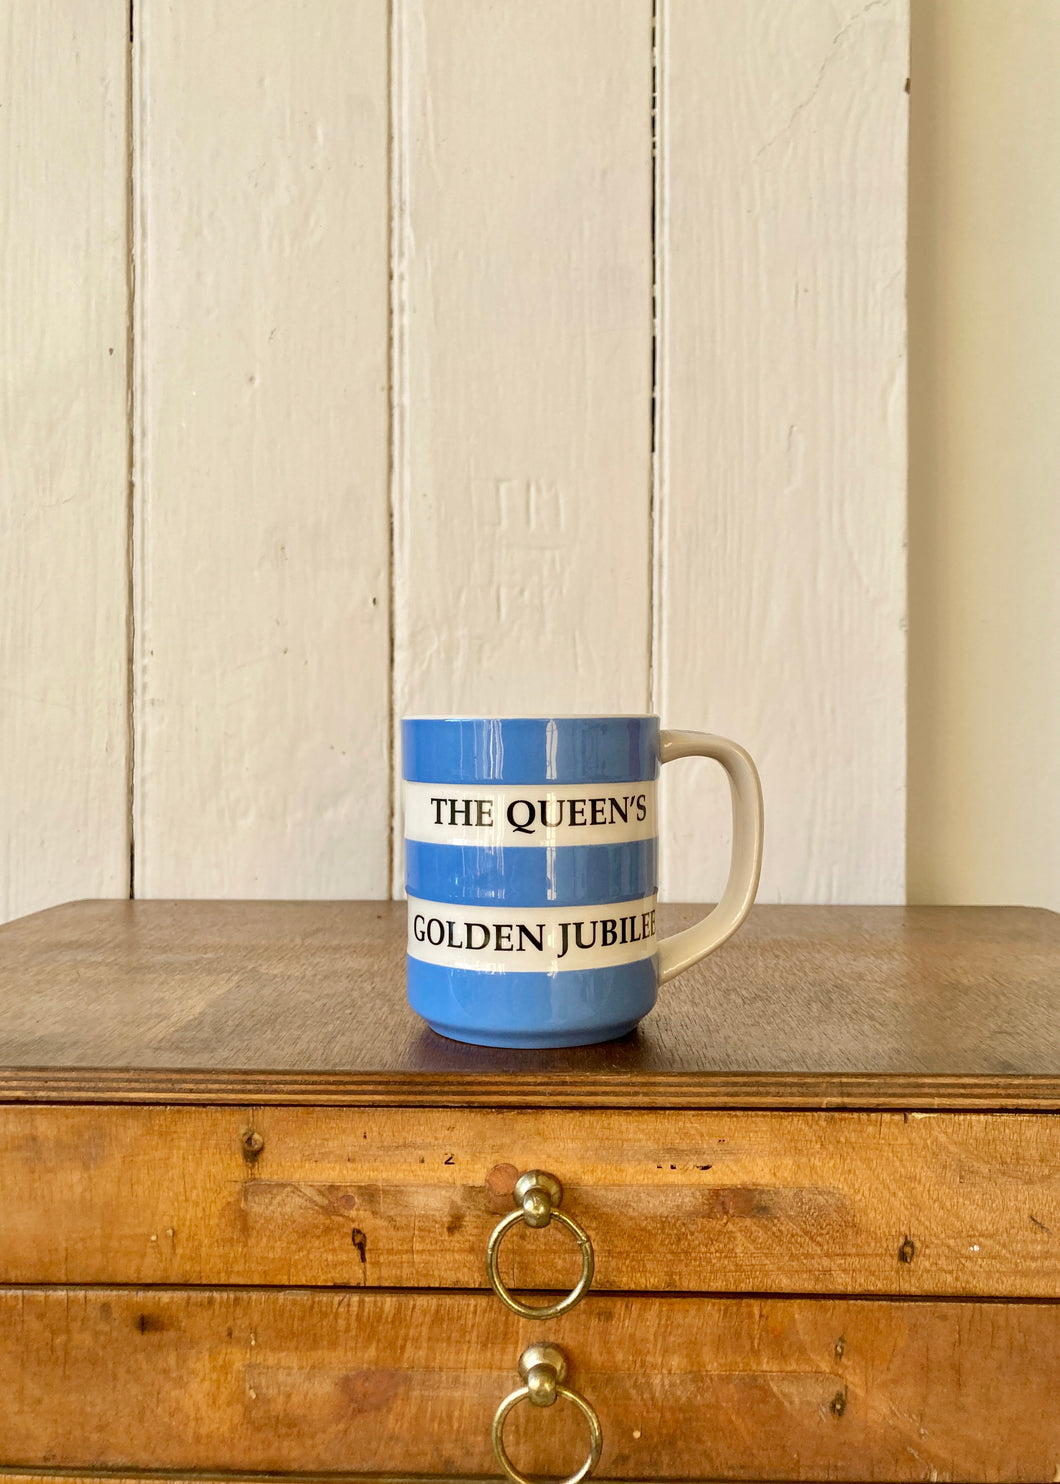 Cornish Blue - The Queen's Golden Jubilee mug - 1952-2002